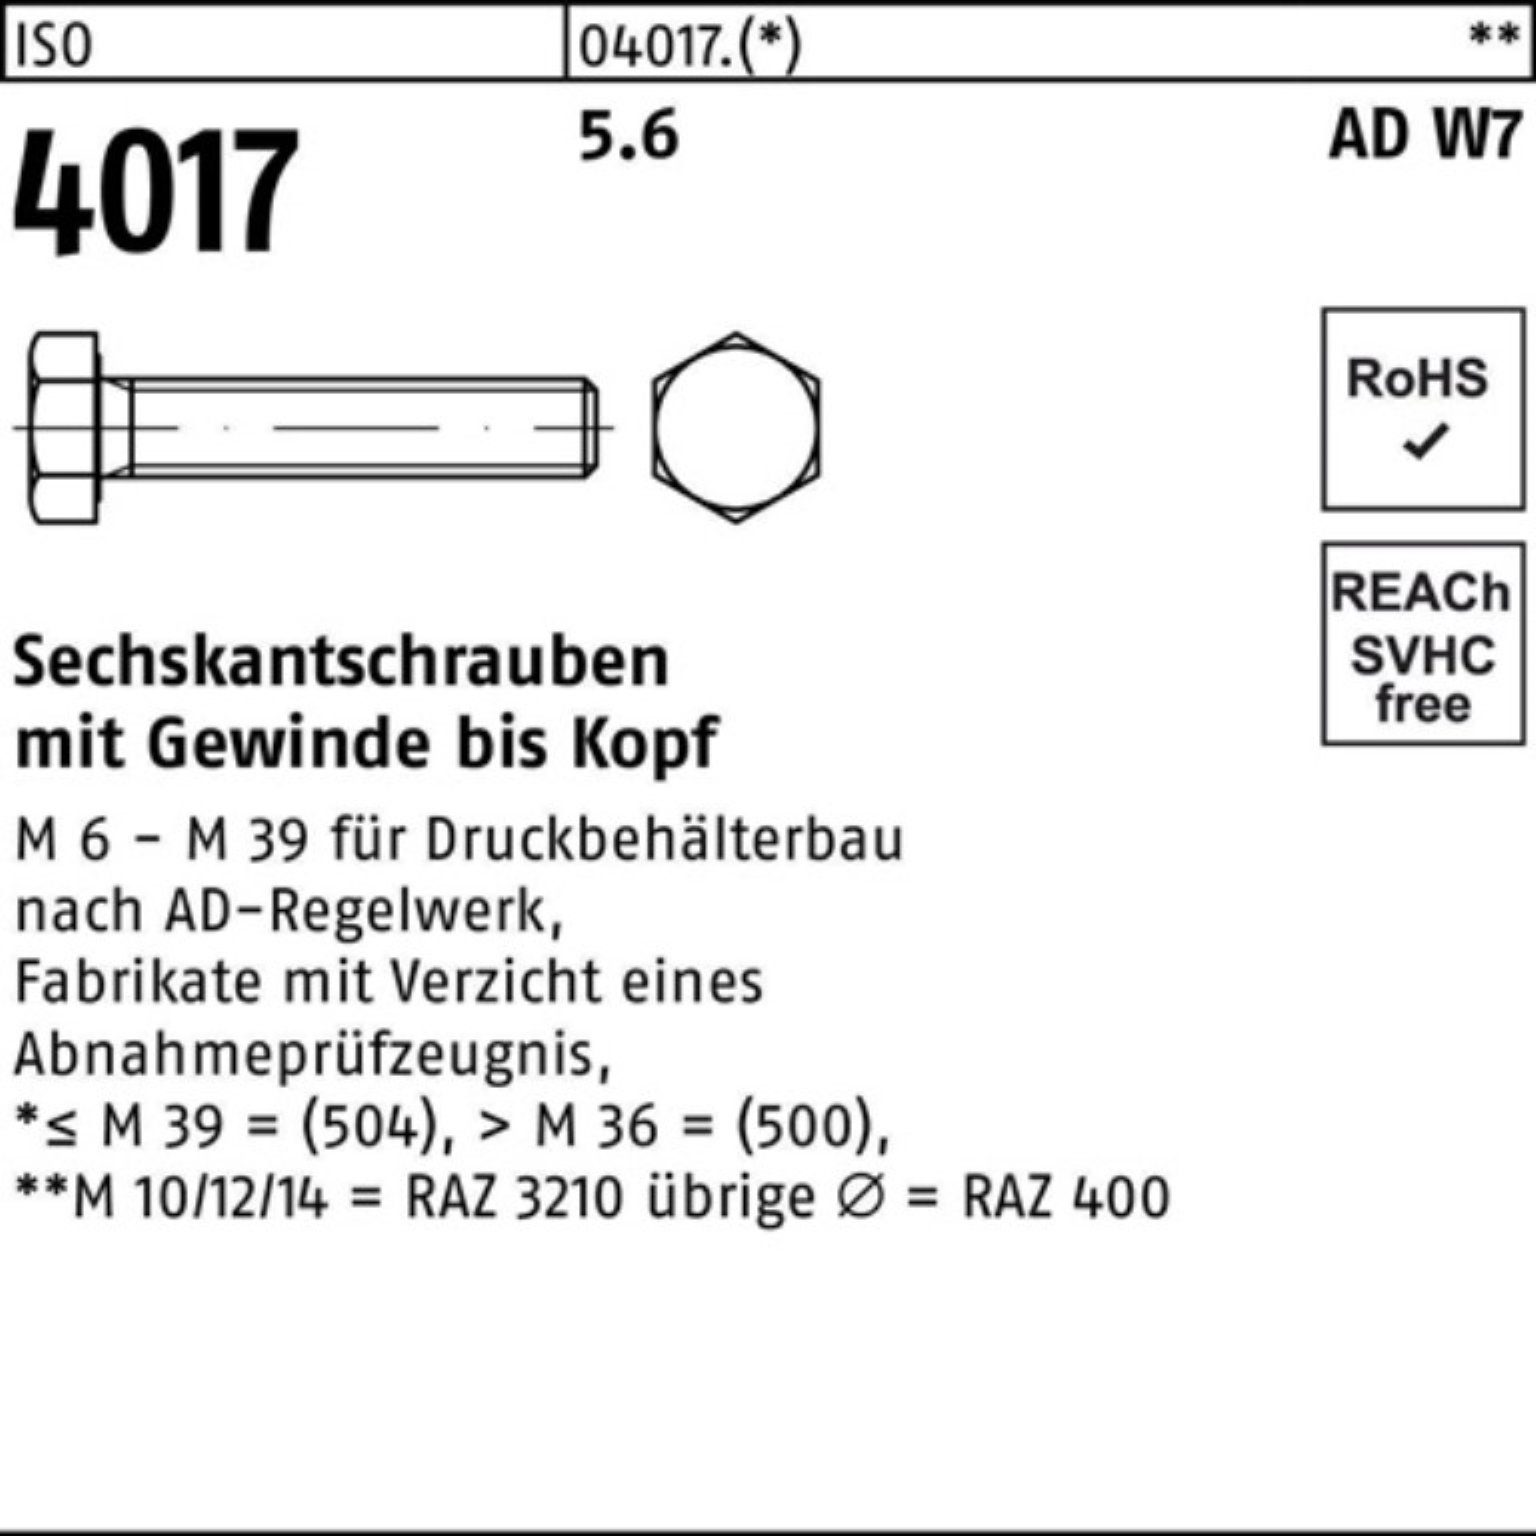 Bufab Sechskantschraube 100er Pack W7 ISO I Stück 5.6 M20x Sechskantschraube 35 VG 4017 25 AD